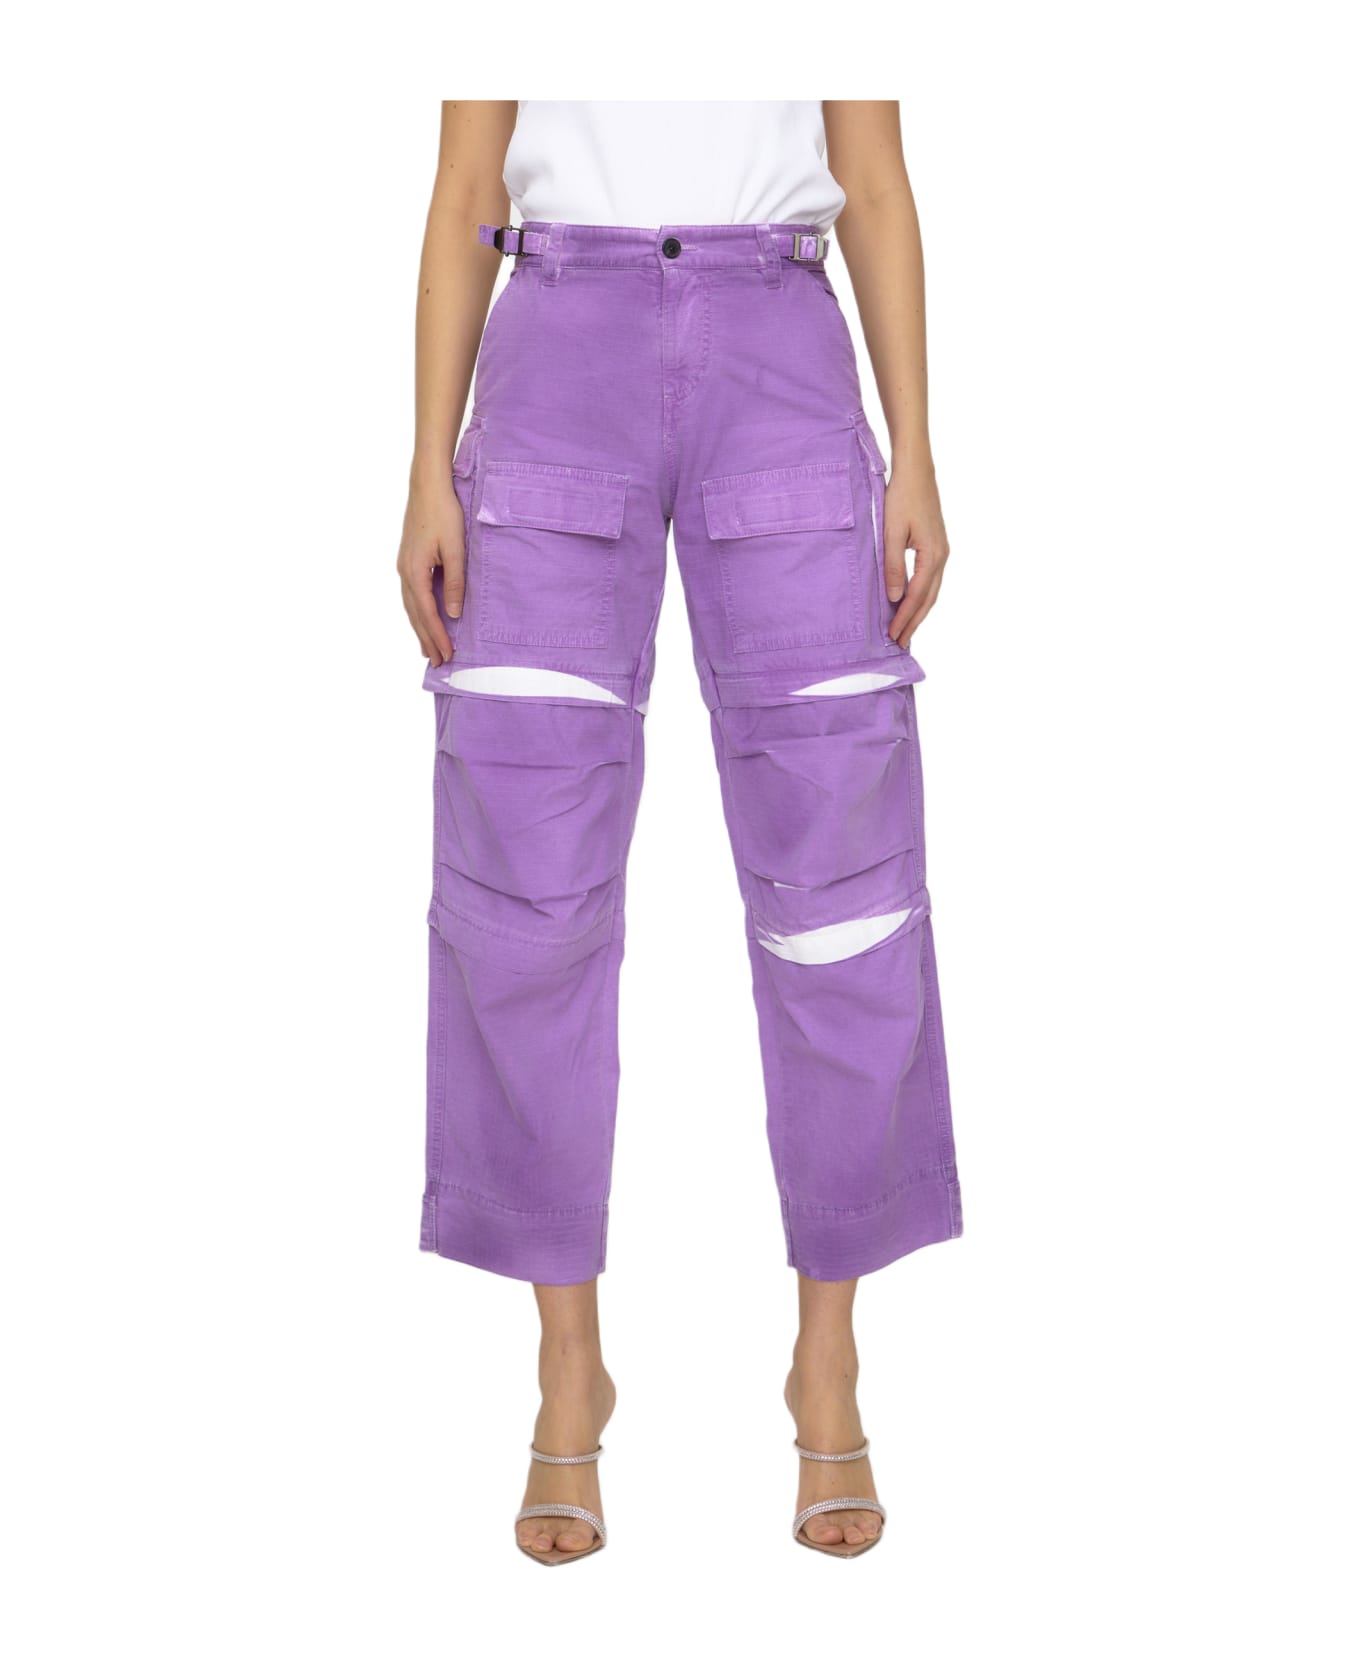 DARKPARK Julia Cargo Pants - Apu Acid Purple